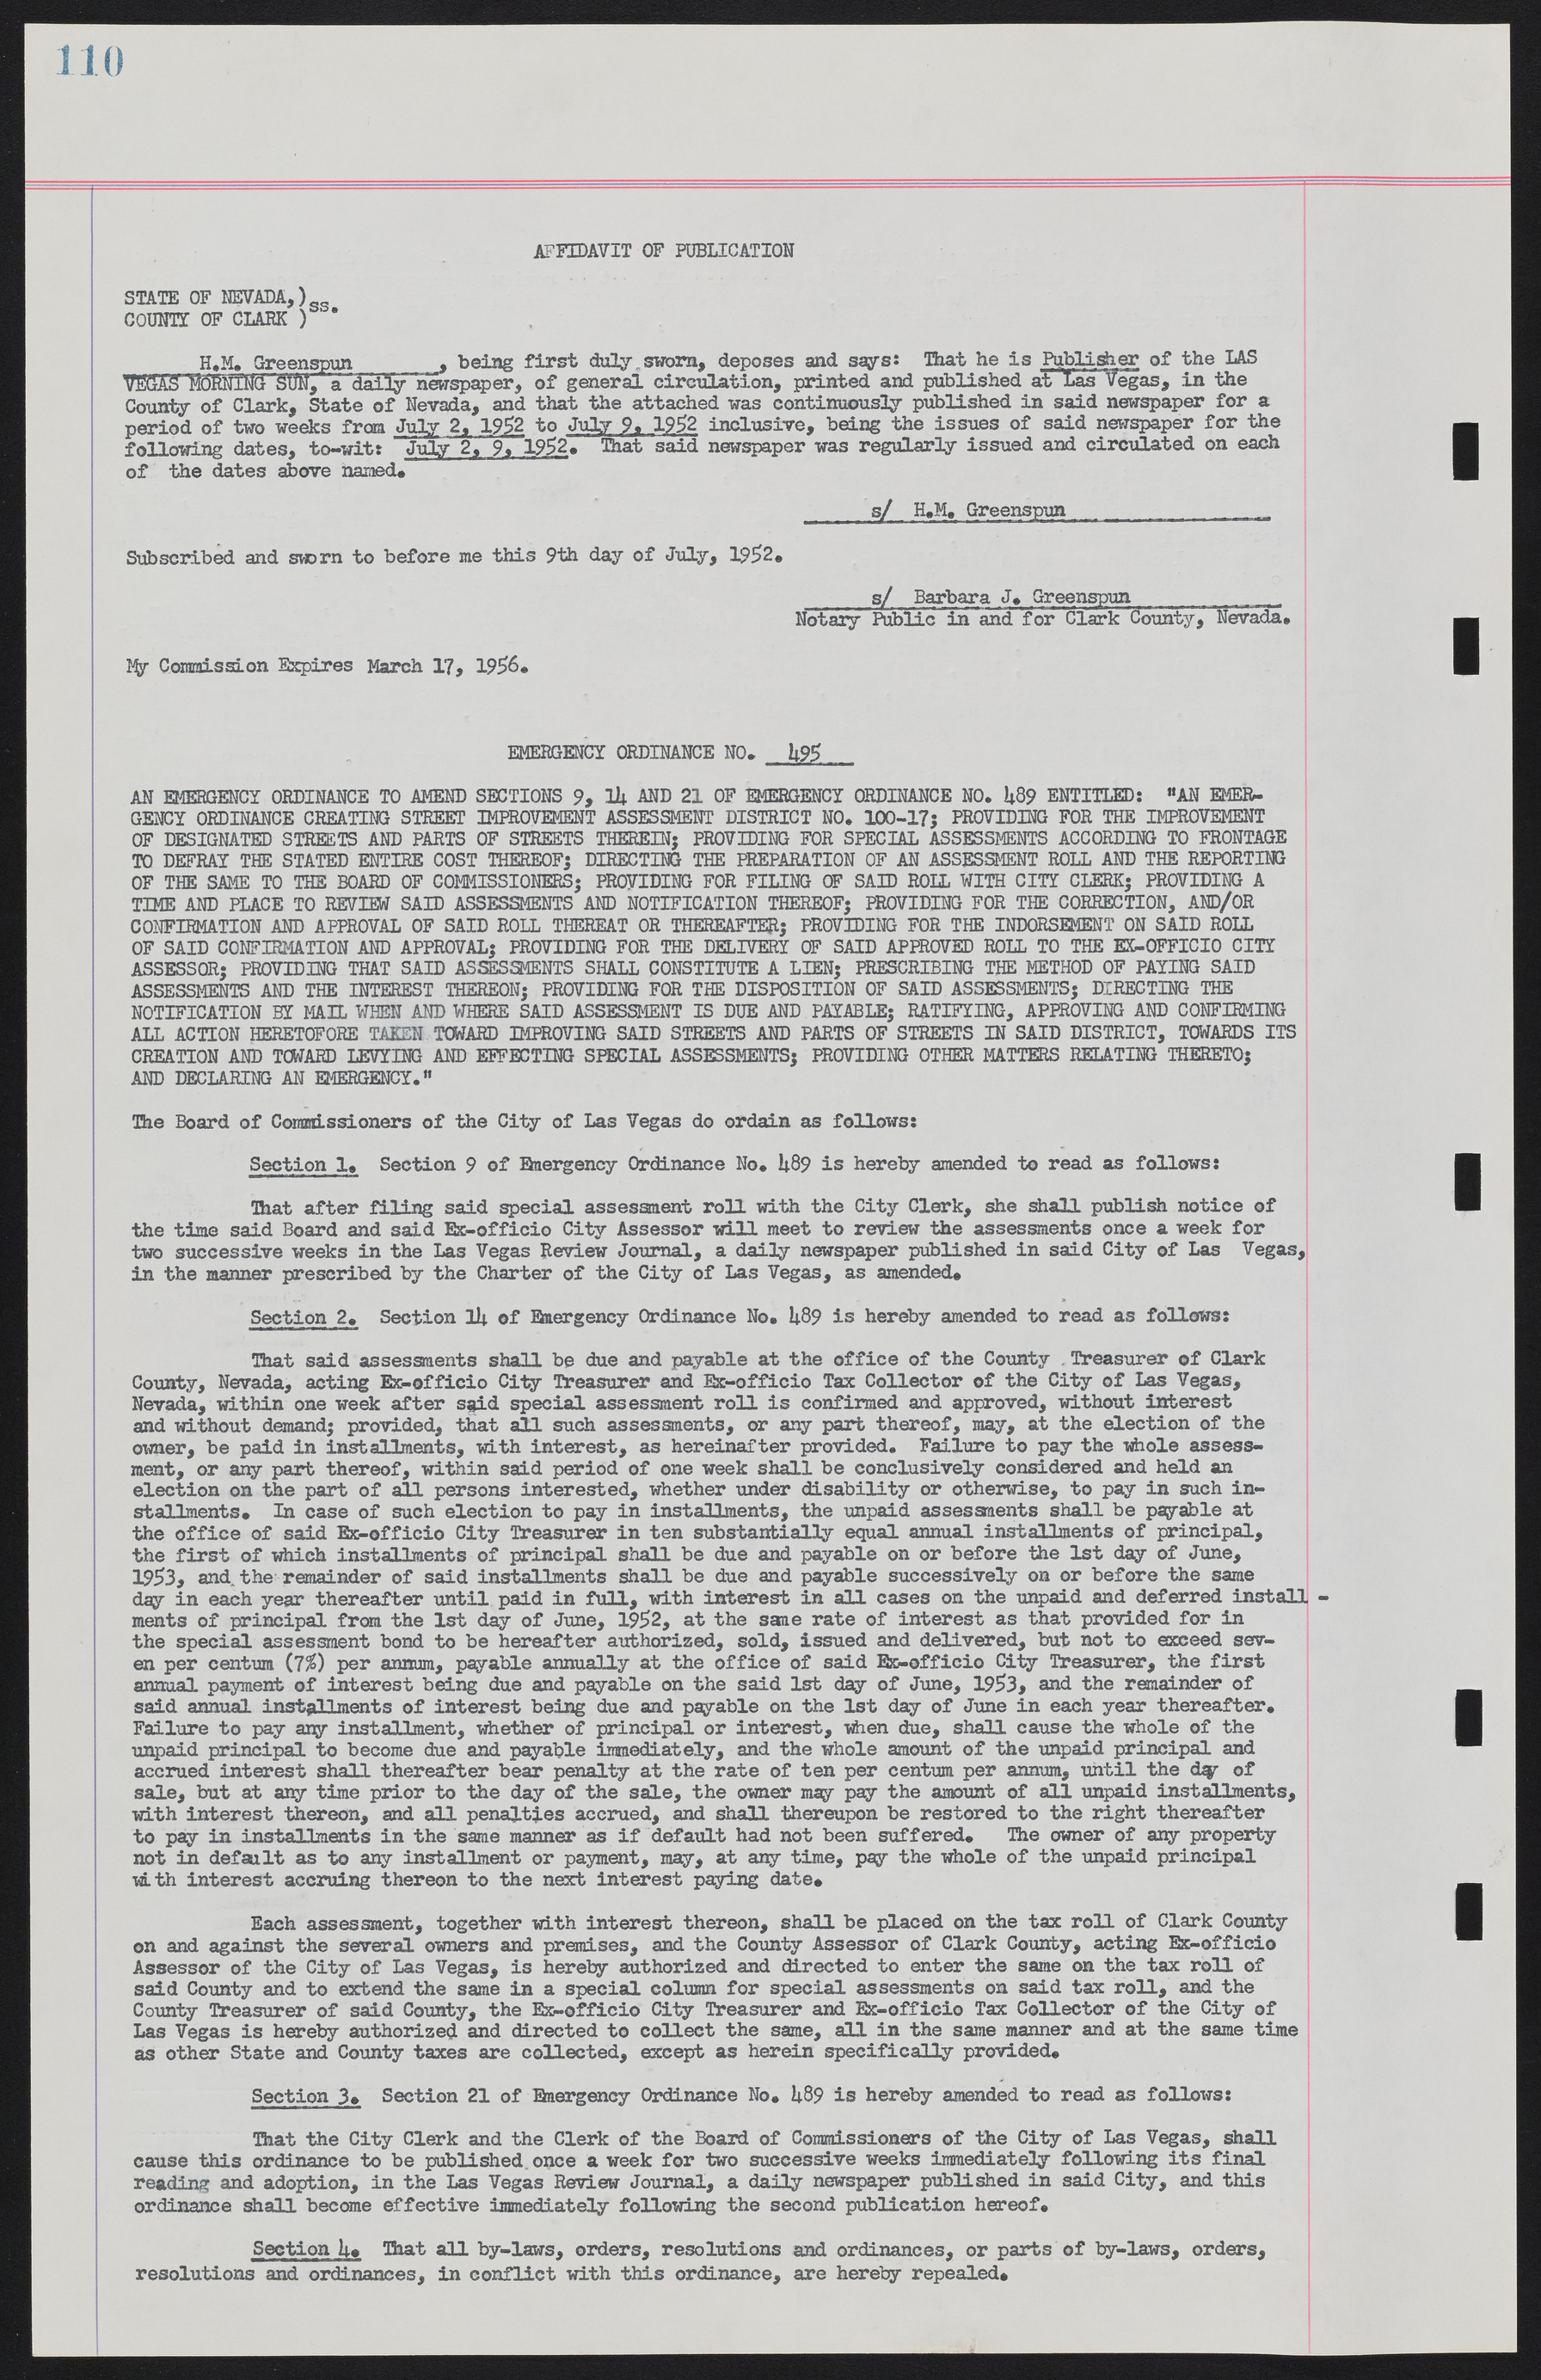 Las Vegas City Ordinances, November 13, 1950 to August 6, 1958, lvc000015-118